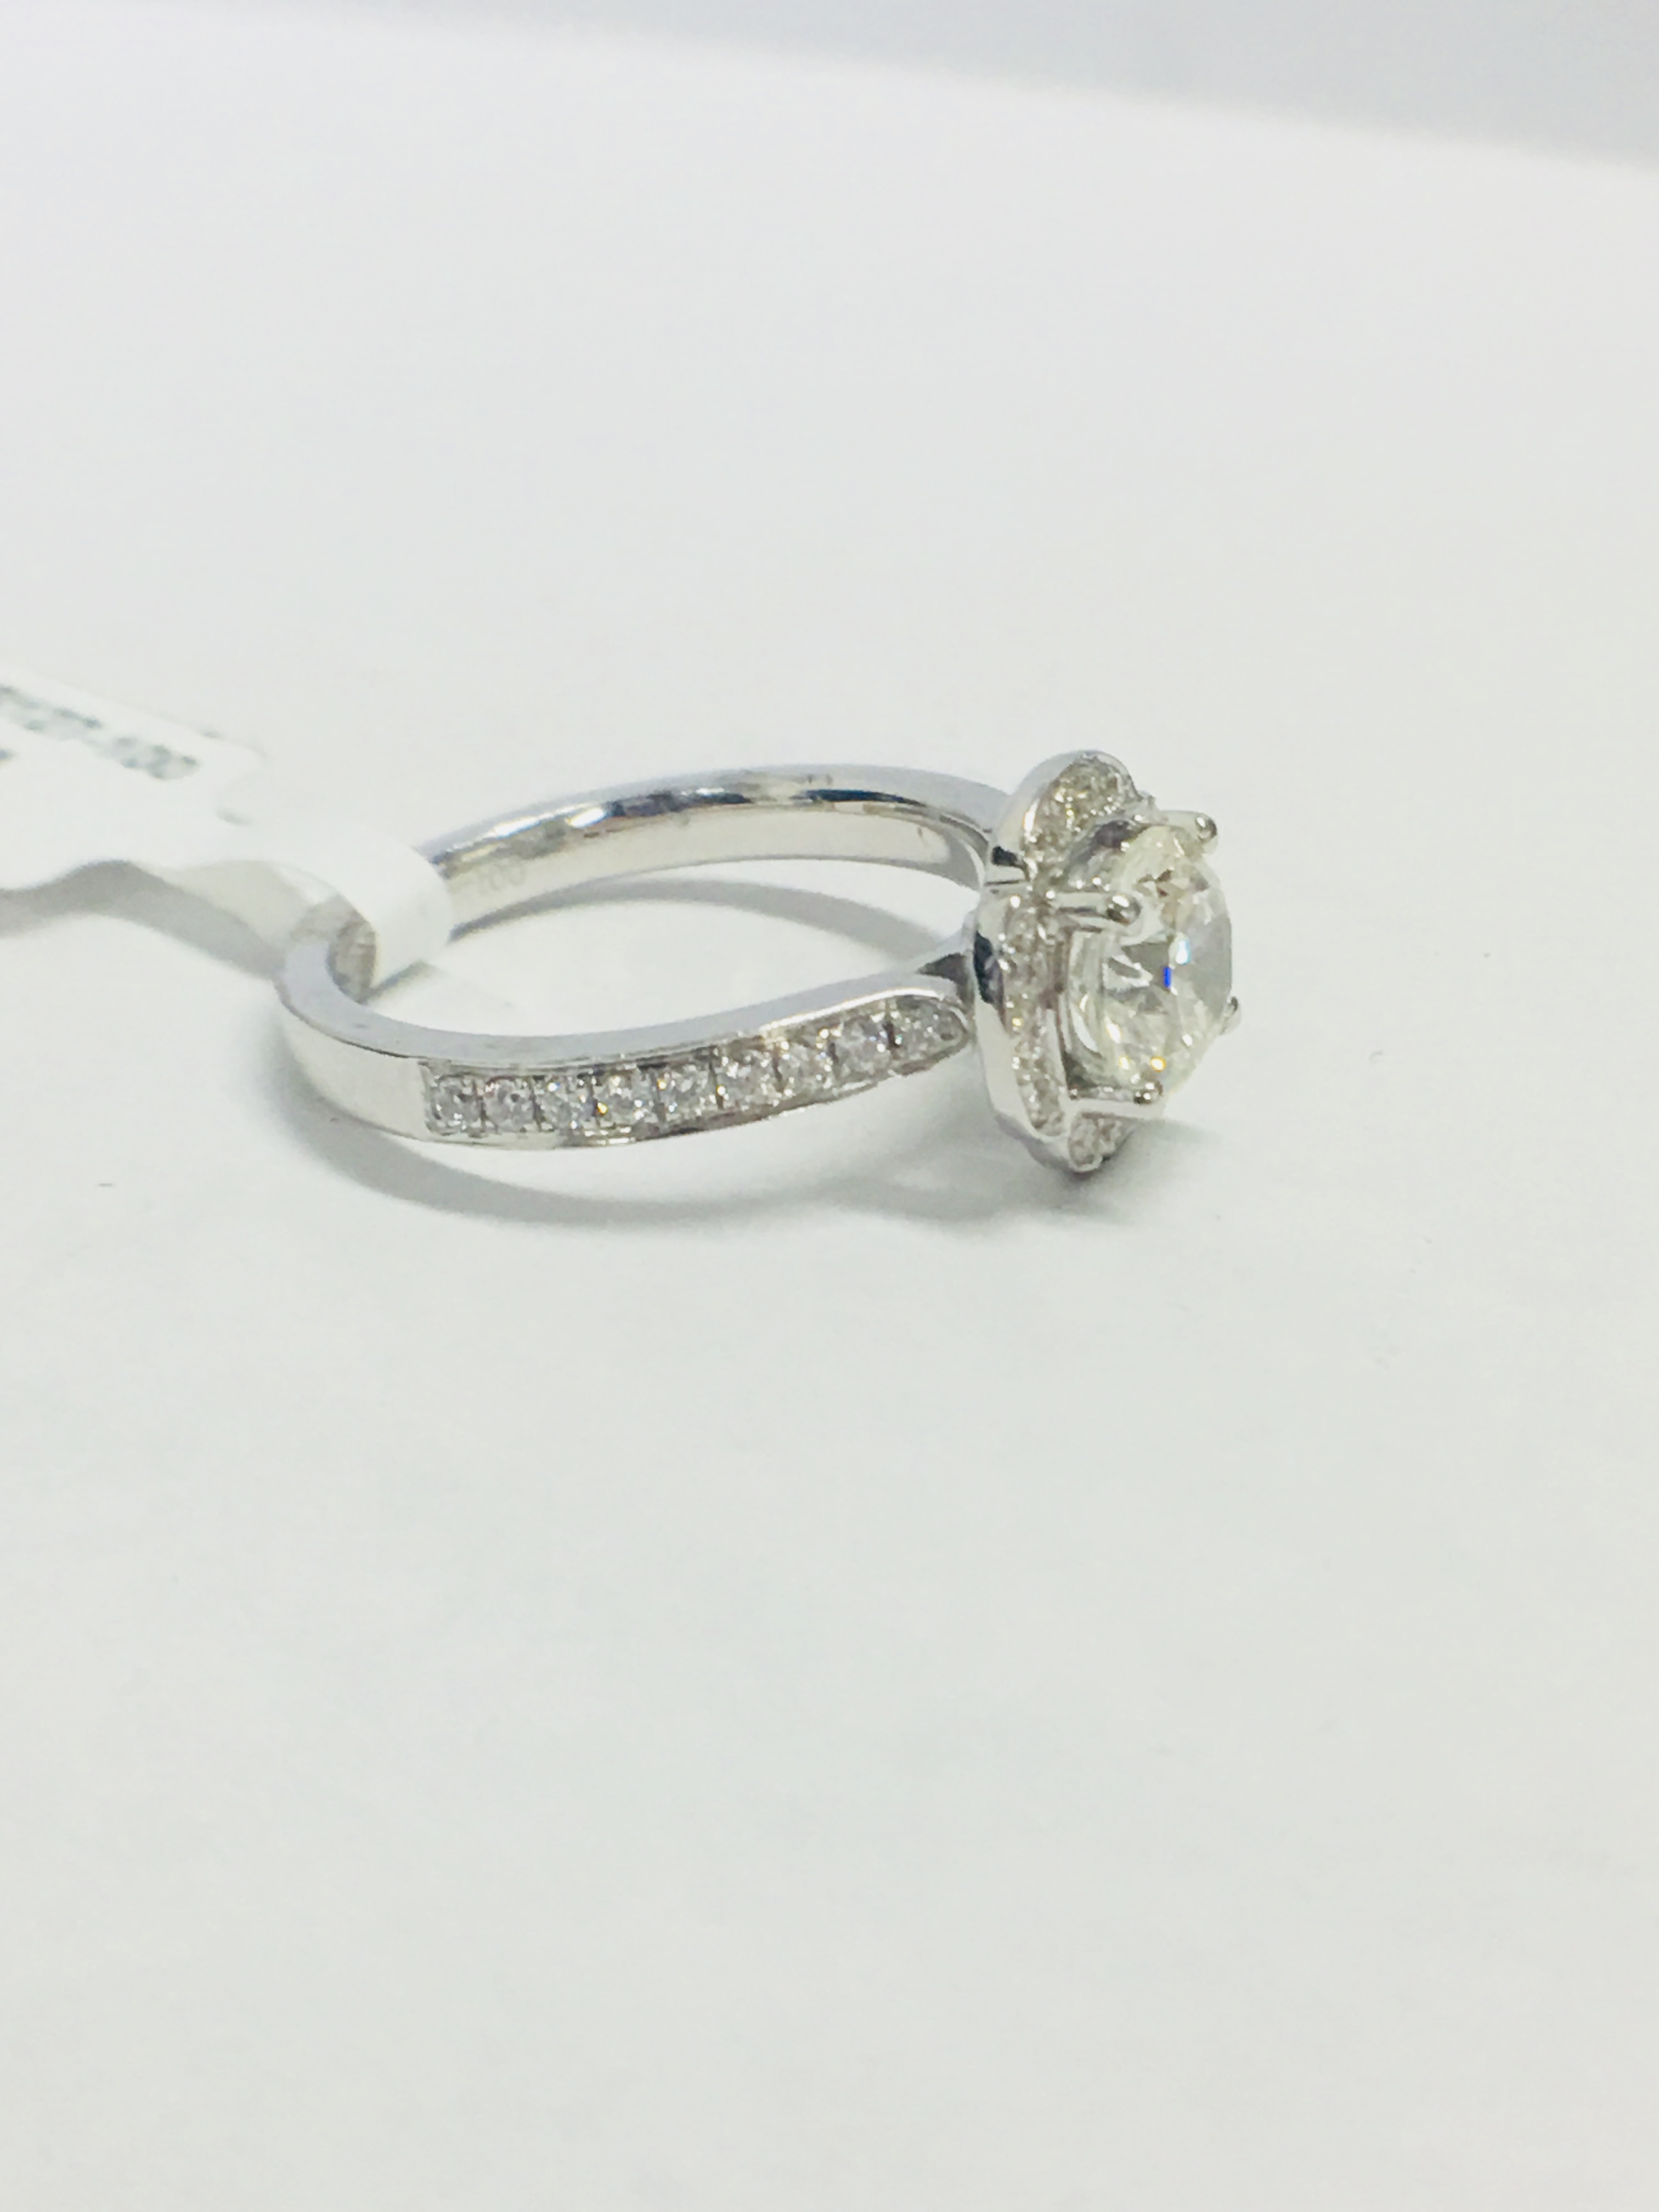 Platinum Diamond Art Deco style Ring - Image 4 of 6